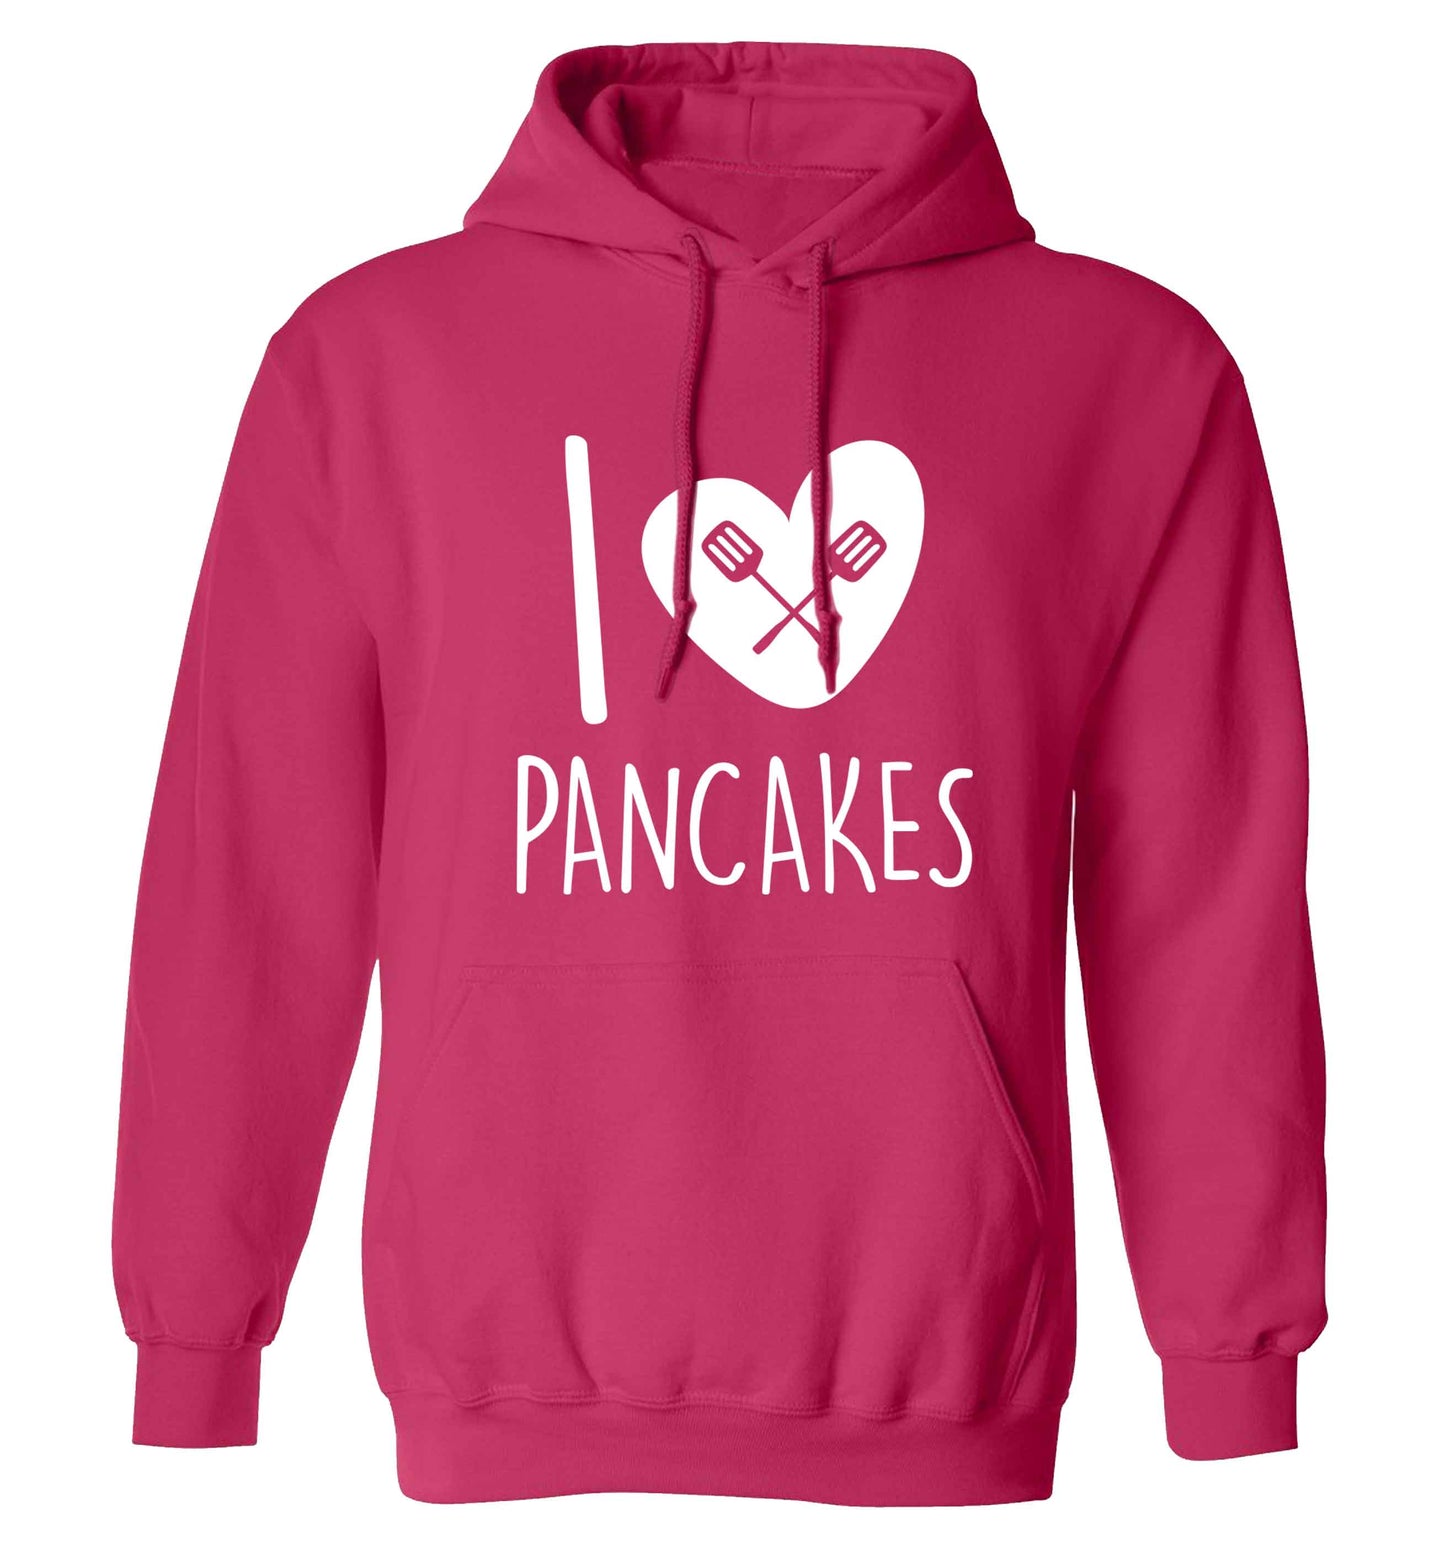 I love pancakes adults unisex pink hoodie 2XL